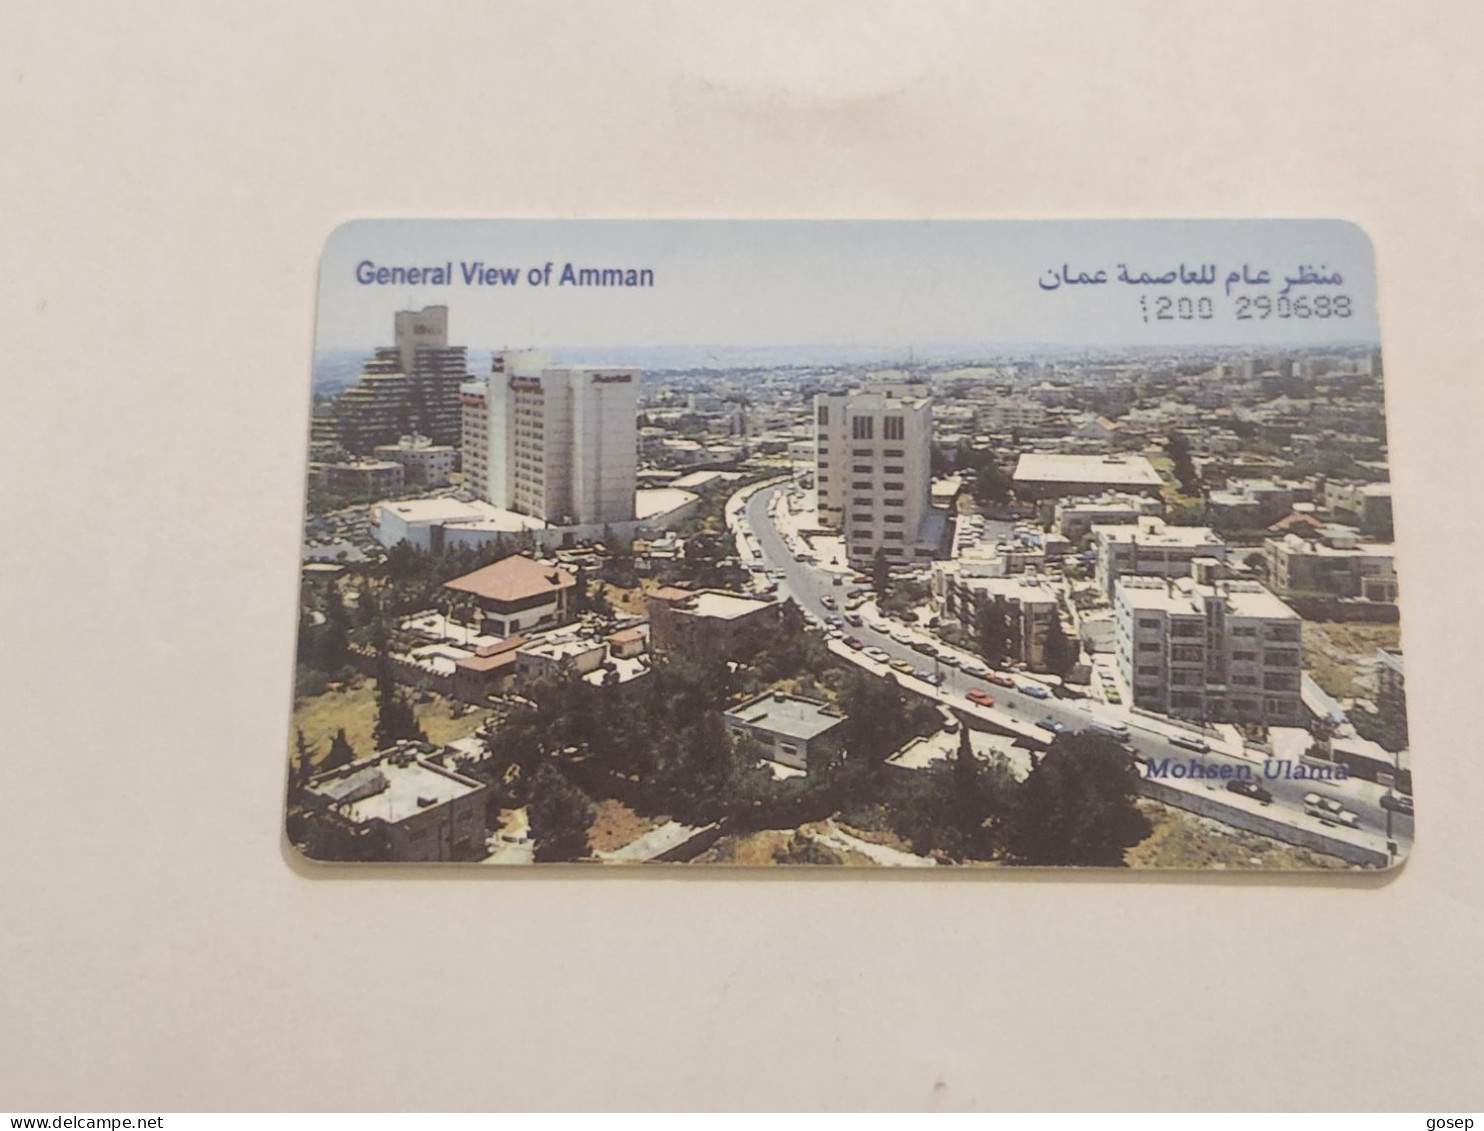 JORDAN-(JO-ALO-0028)-King Abdullah Mosque-(128)-(1200-290688)-(15JD)-(9/2000)-used Card+1card Prepiad Free - Jordan